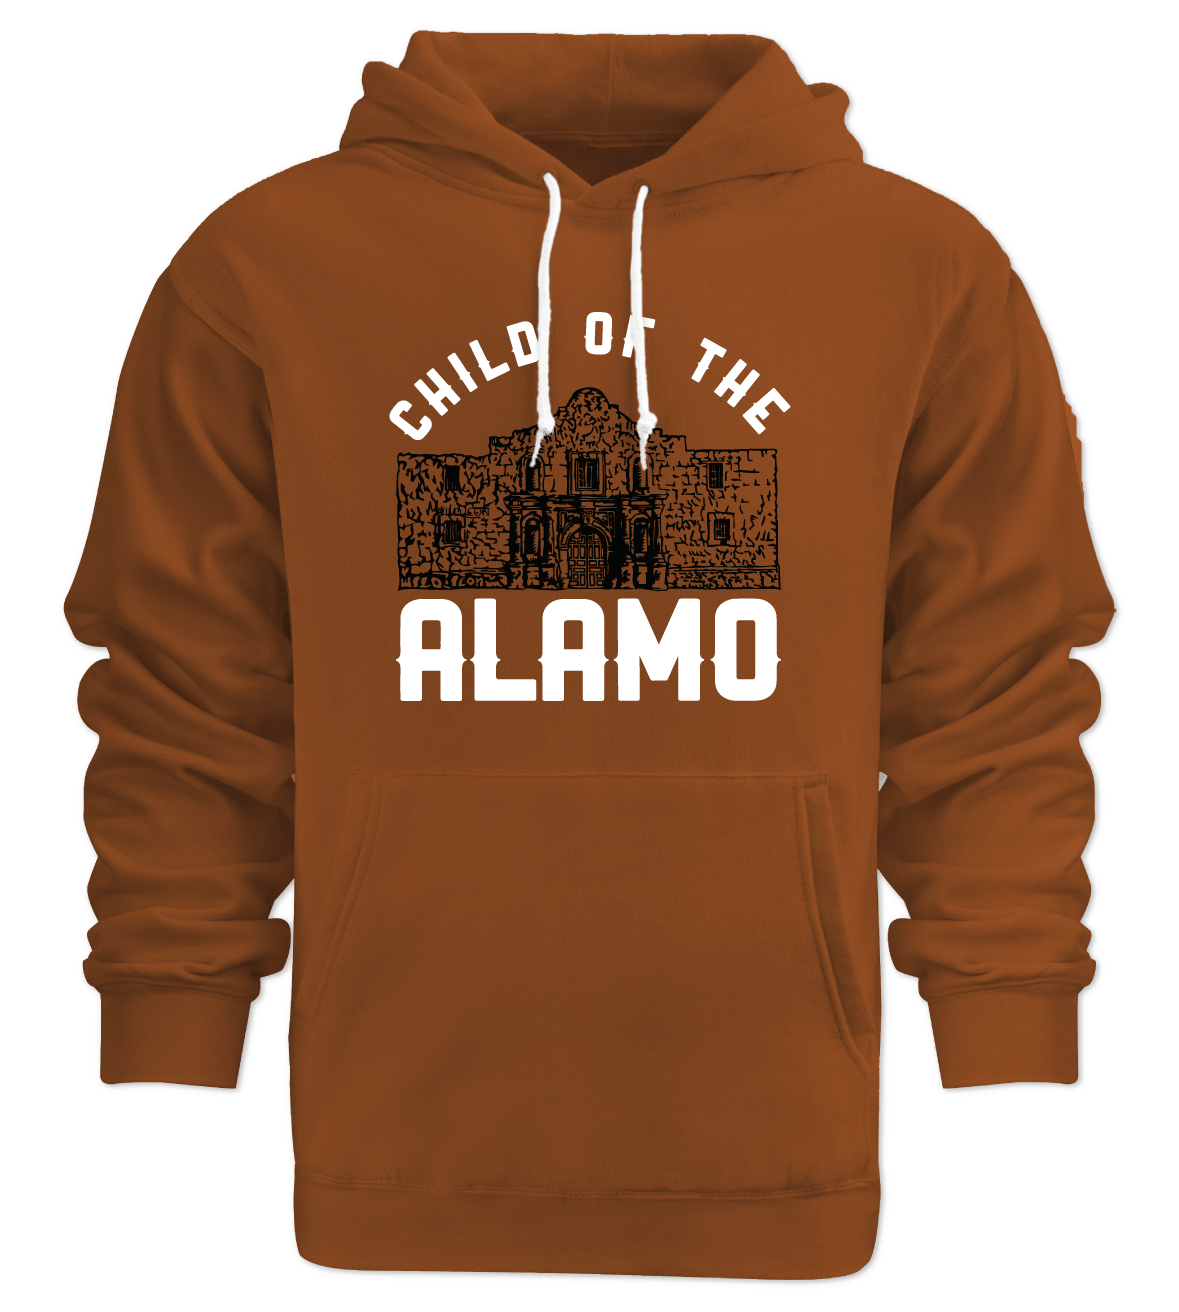 Child of the Alamo